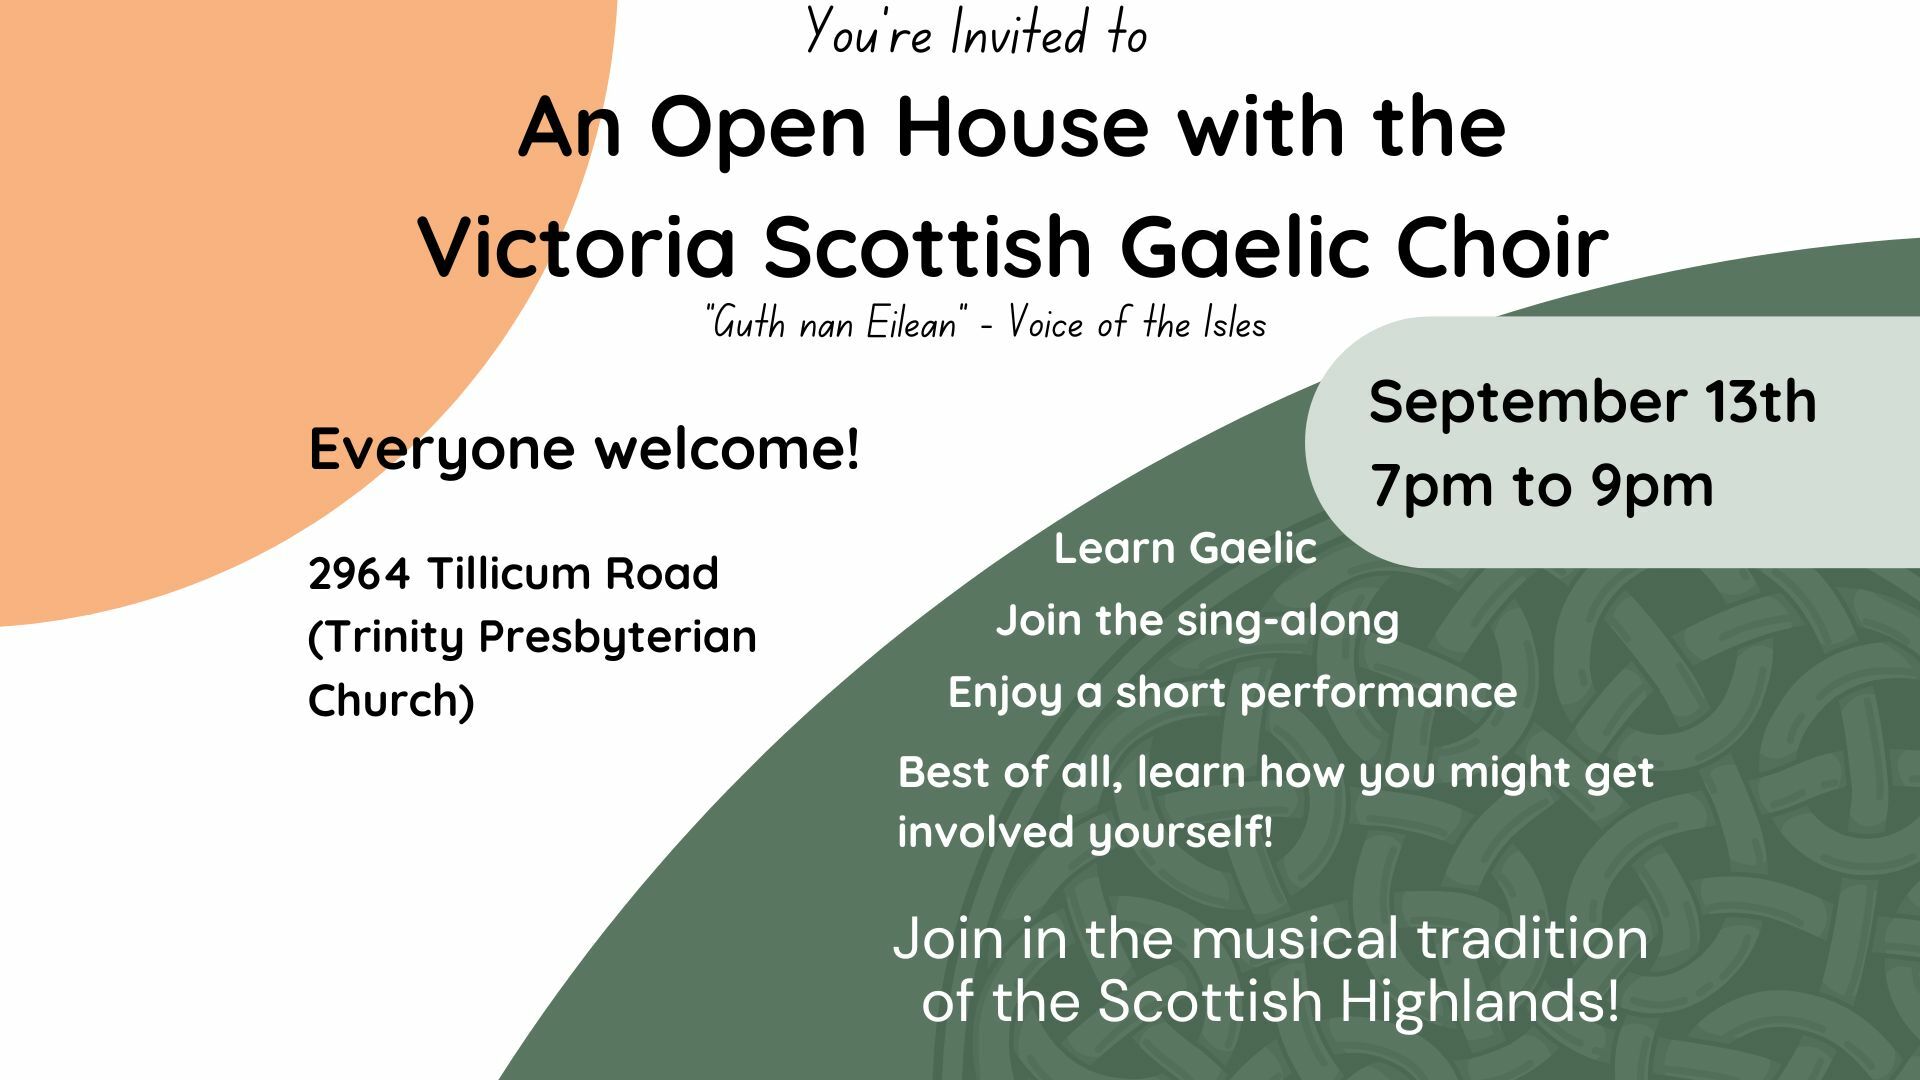 Open House with the Victoria Scottish Gaelic Choir, Victoria, British Columbia, Canada